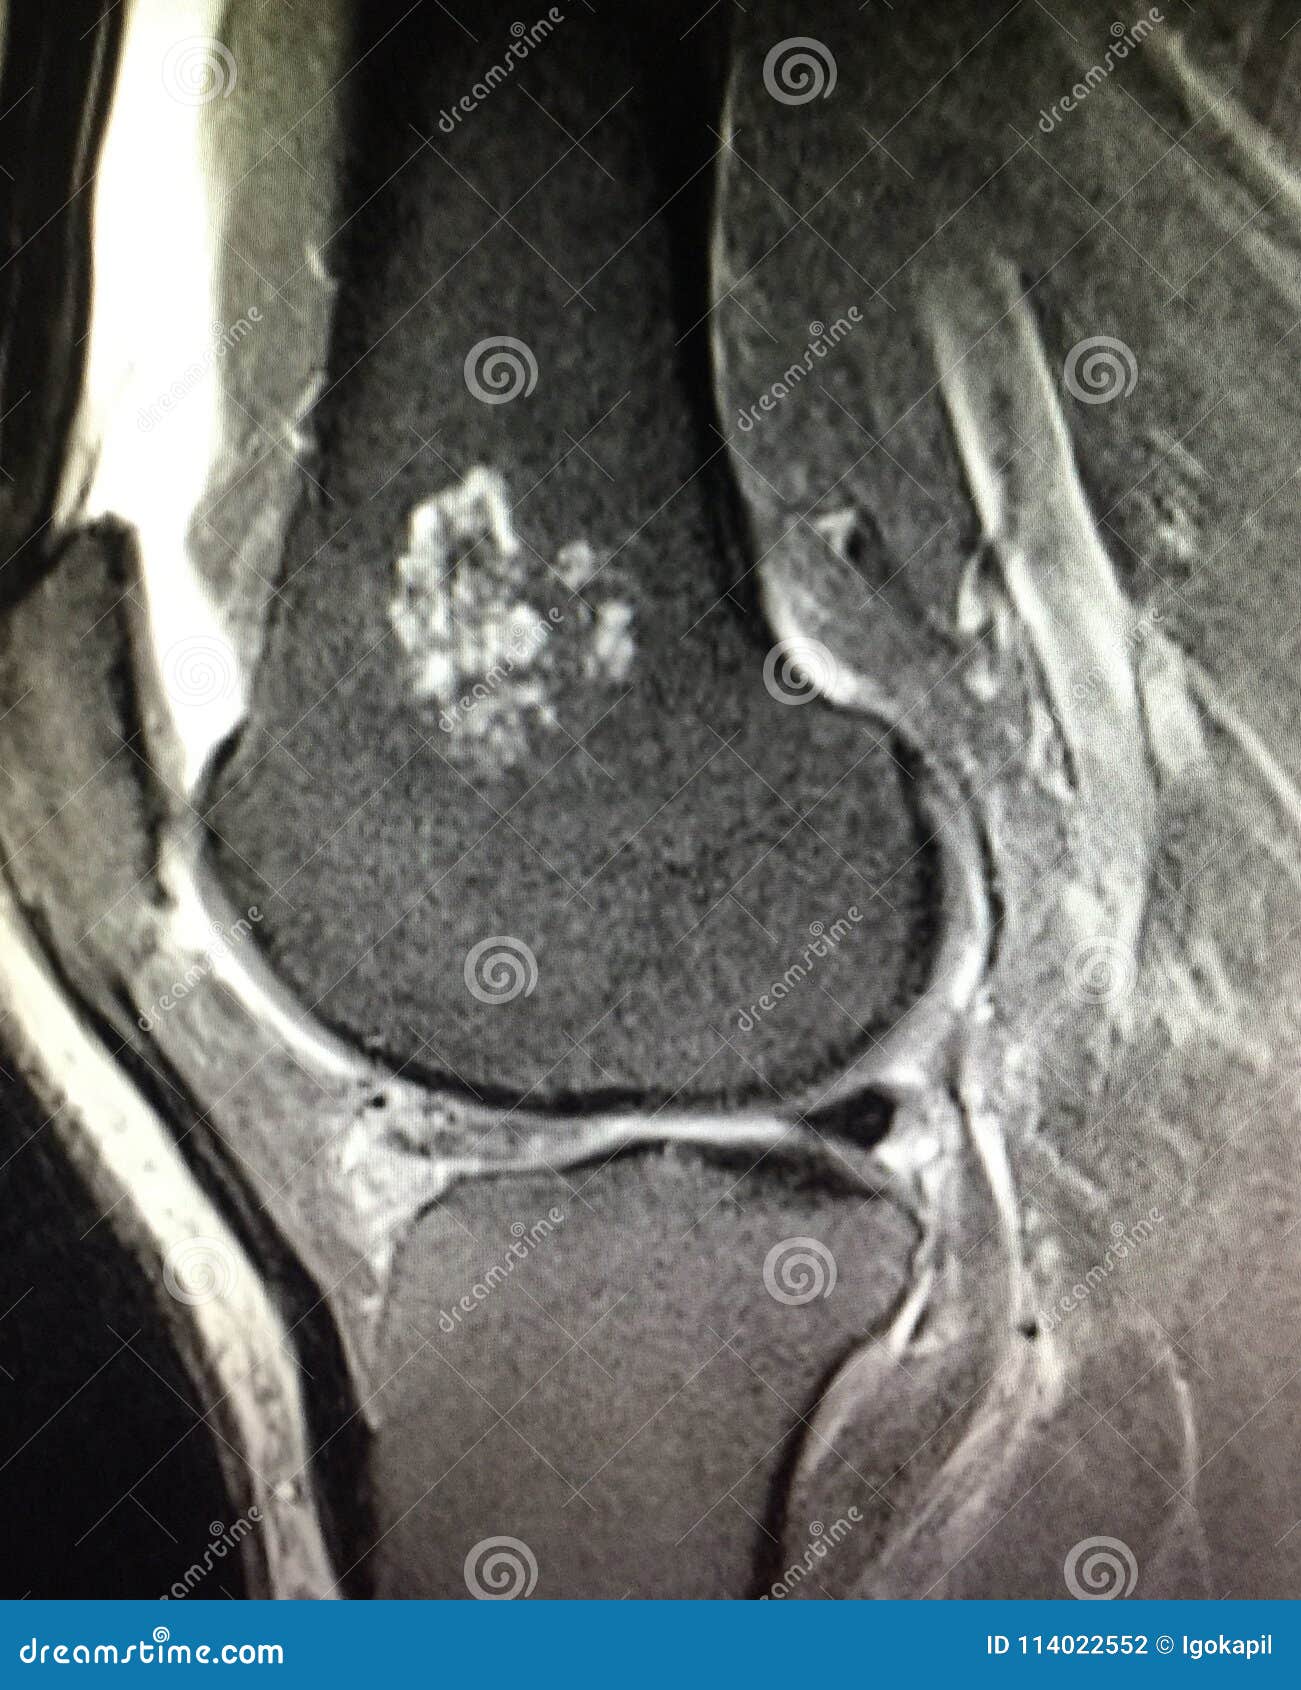 Knee Pathology Chondroid Lesion Enchondroma Mri Stock Photo - Image of ...